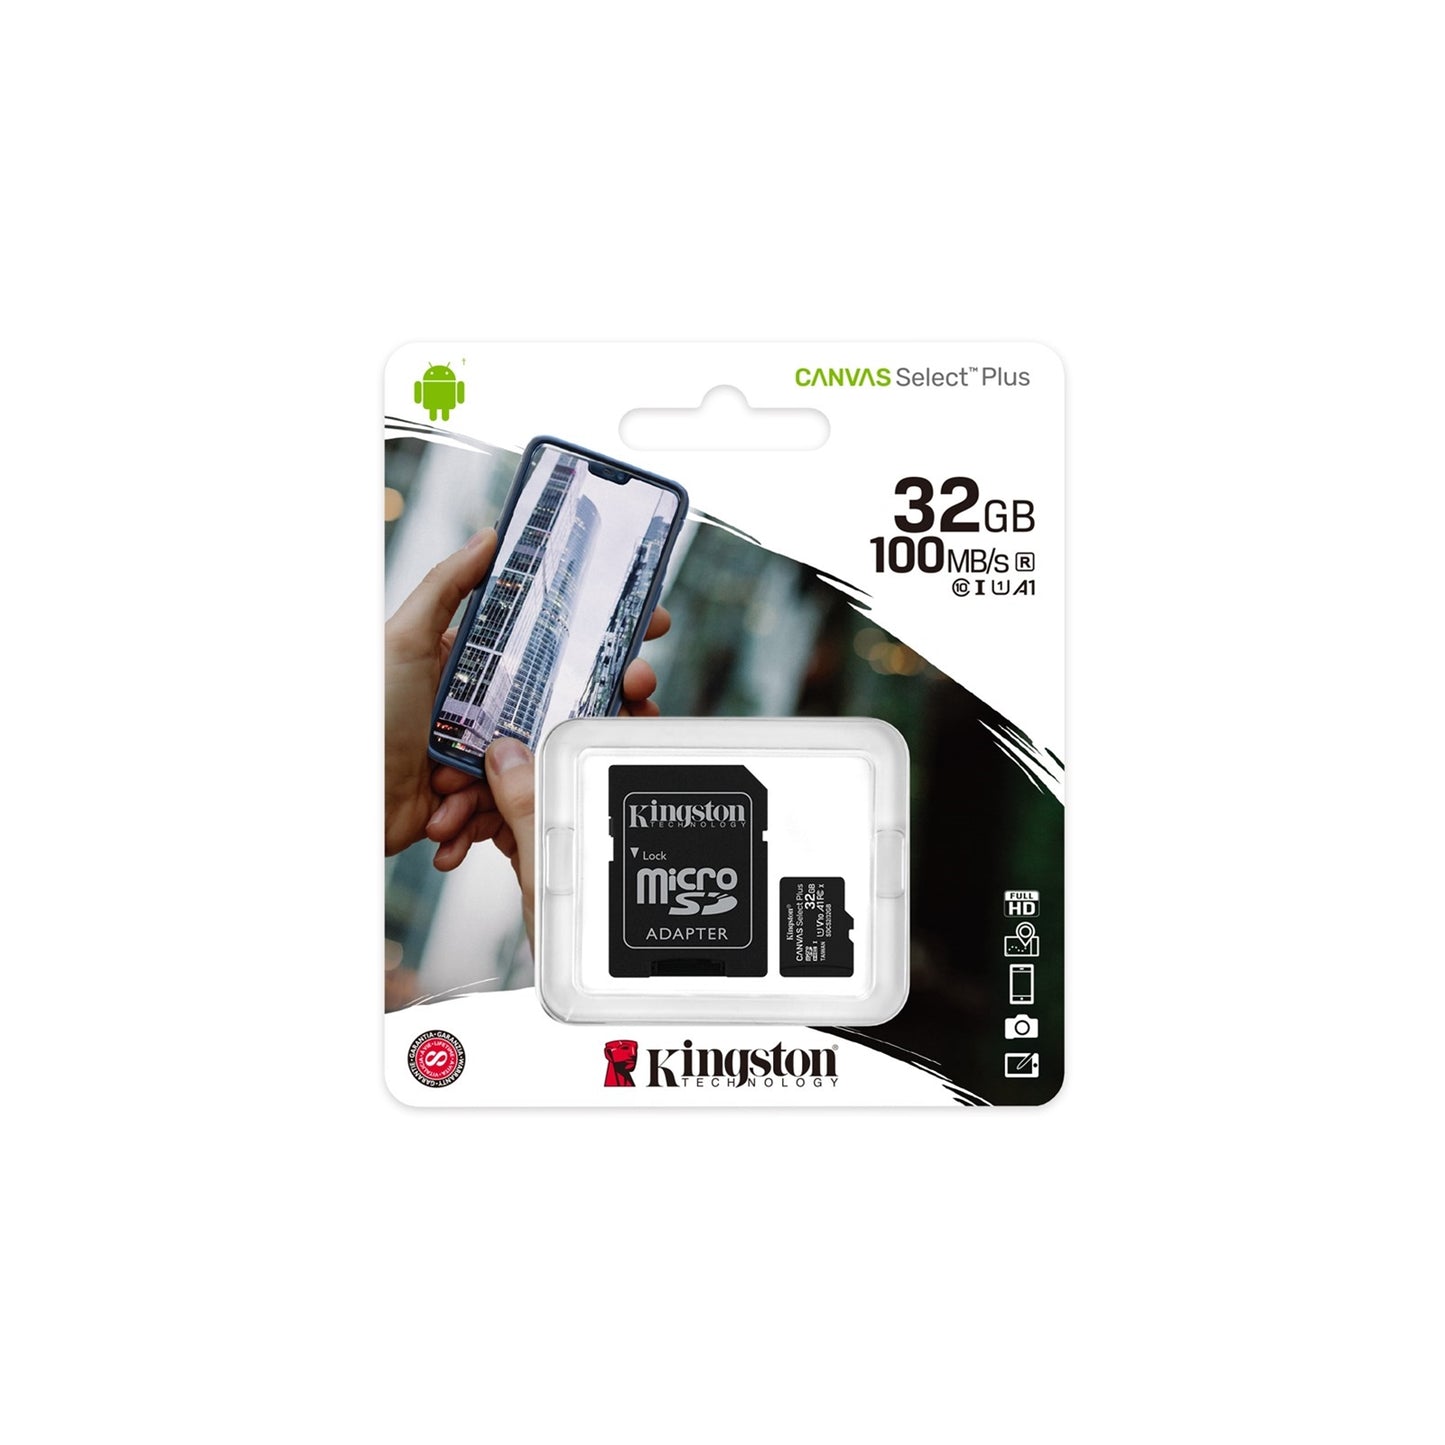 Kingston - Canvas Select Plus - MicroSD Class 10 Memory Card & SD Adapter - 32GB